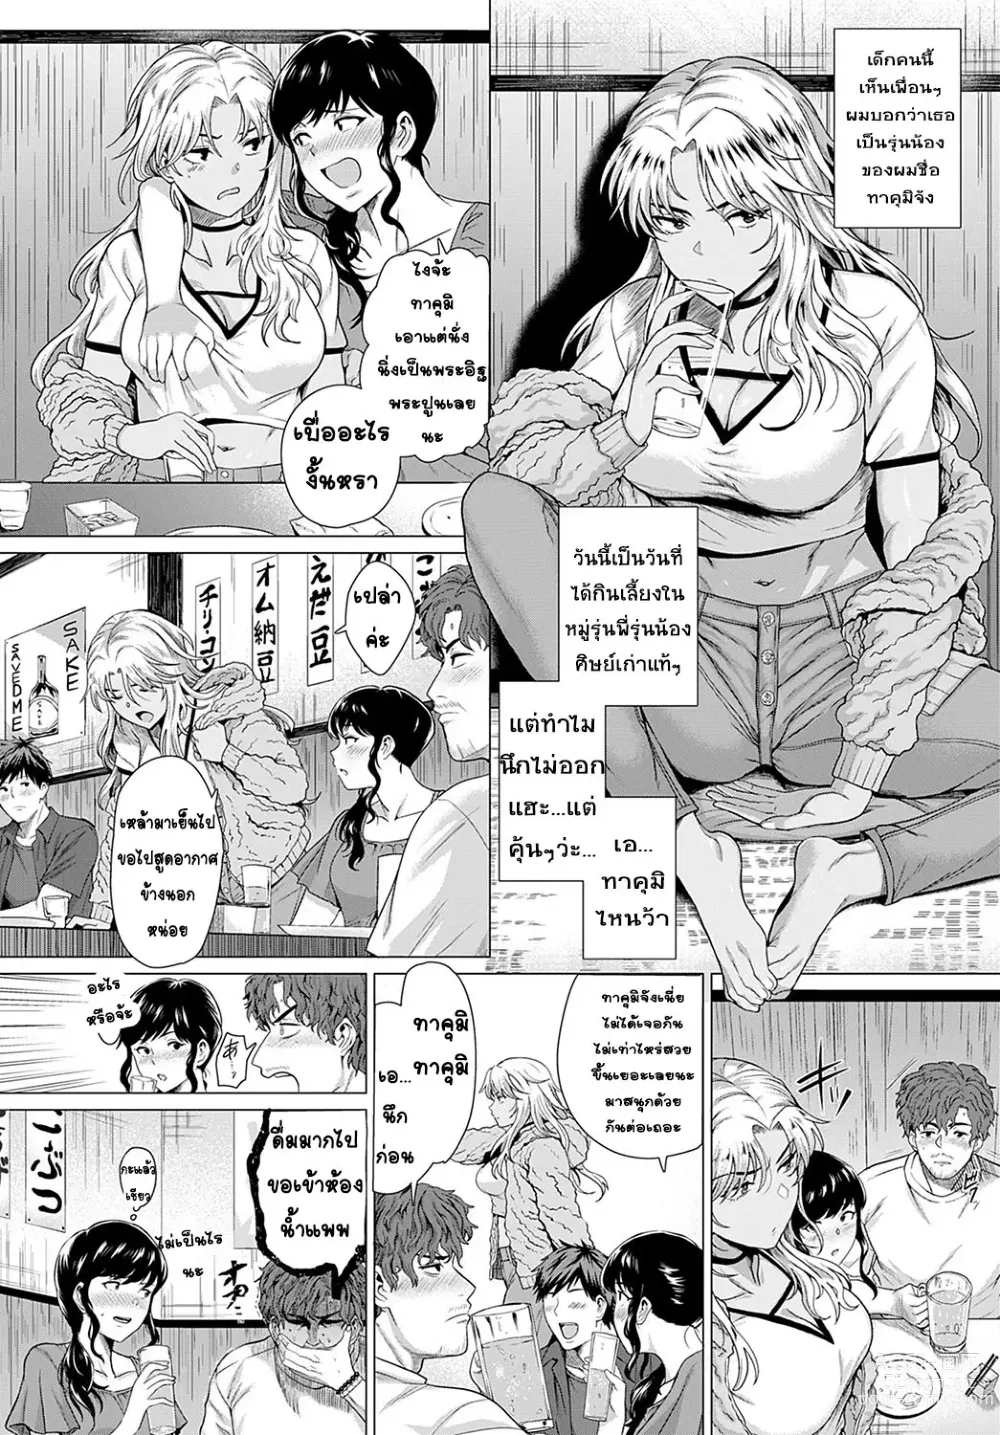 Page 2 of manga Douzo, Okawarinaku.